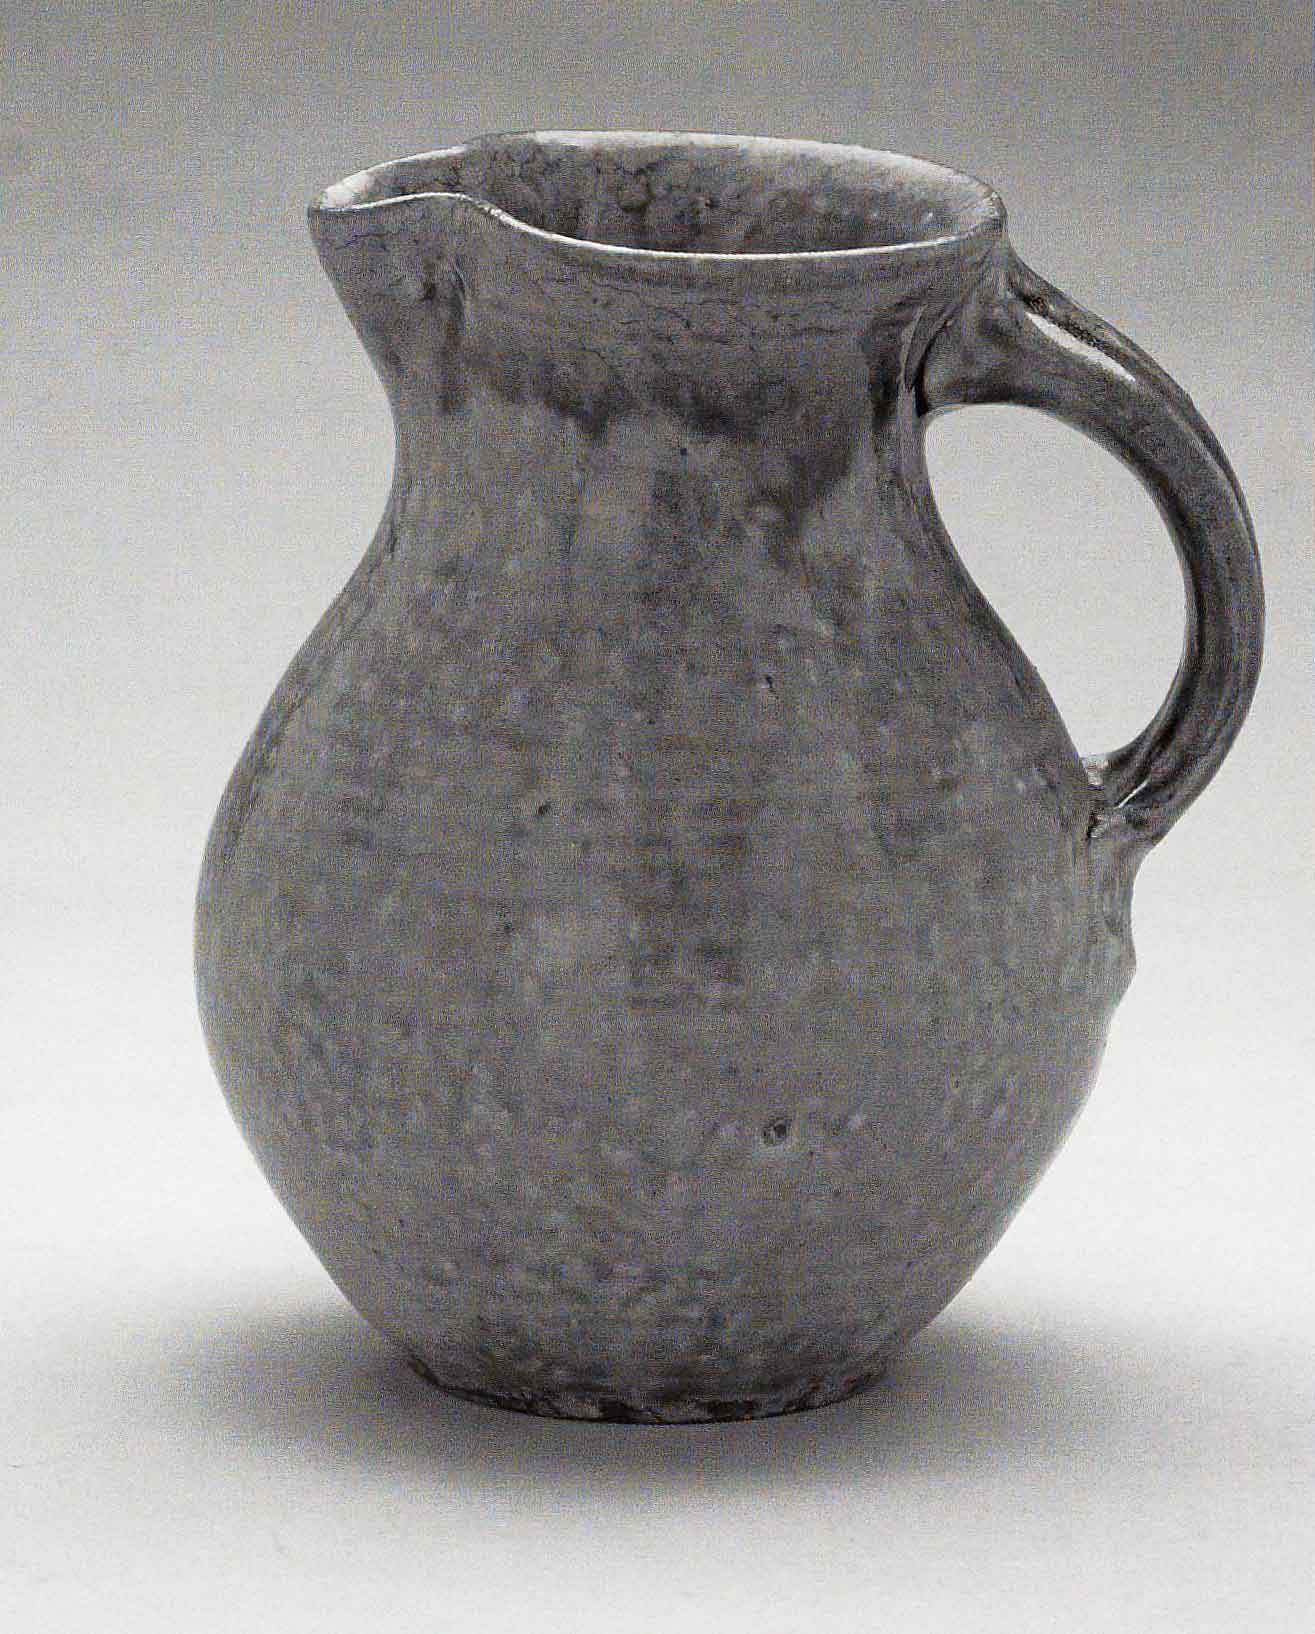 Jug, March 2005. Cone 10 woodfired stoneware, ash glaze over porcelain slip. H 7.5&quot; x W 6&quot;. Photograph by VanZandenbergen.